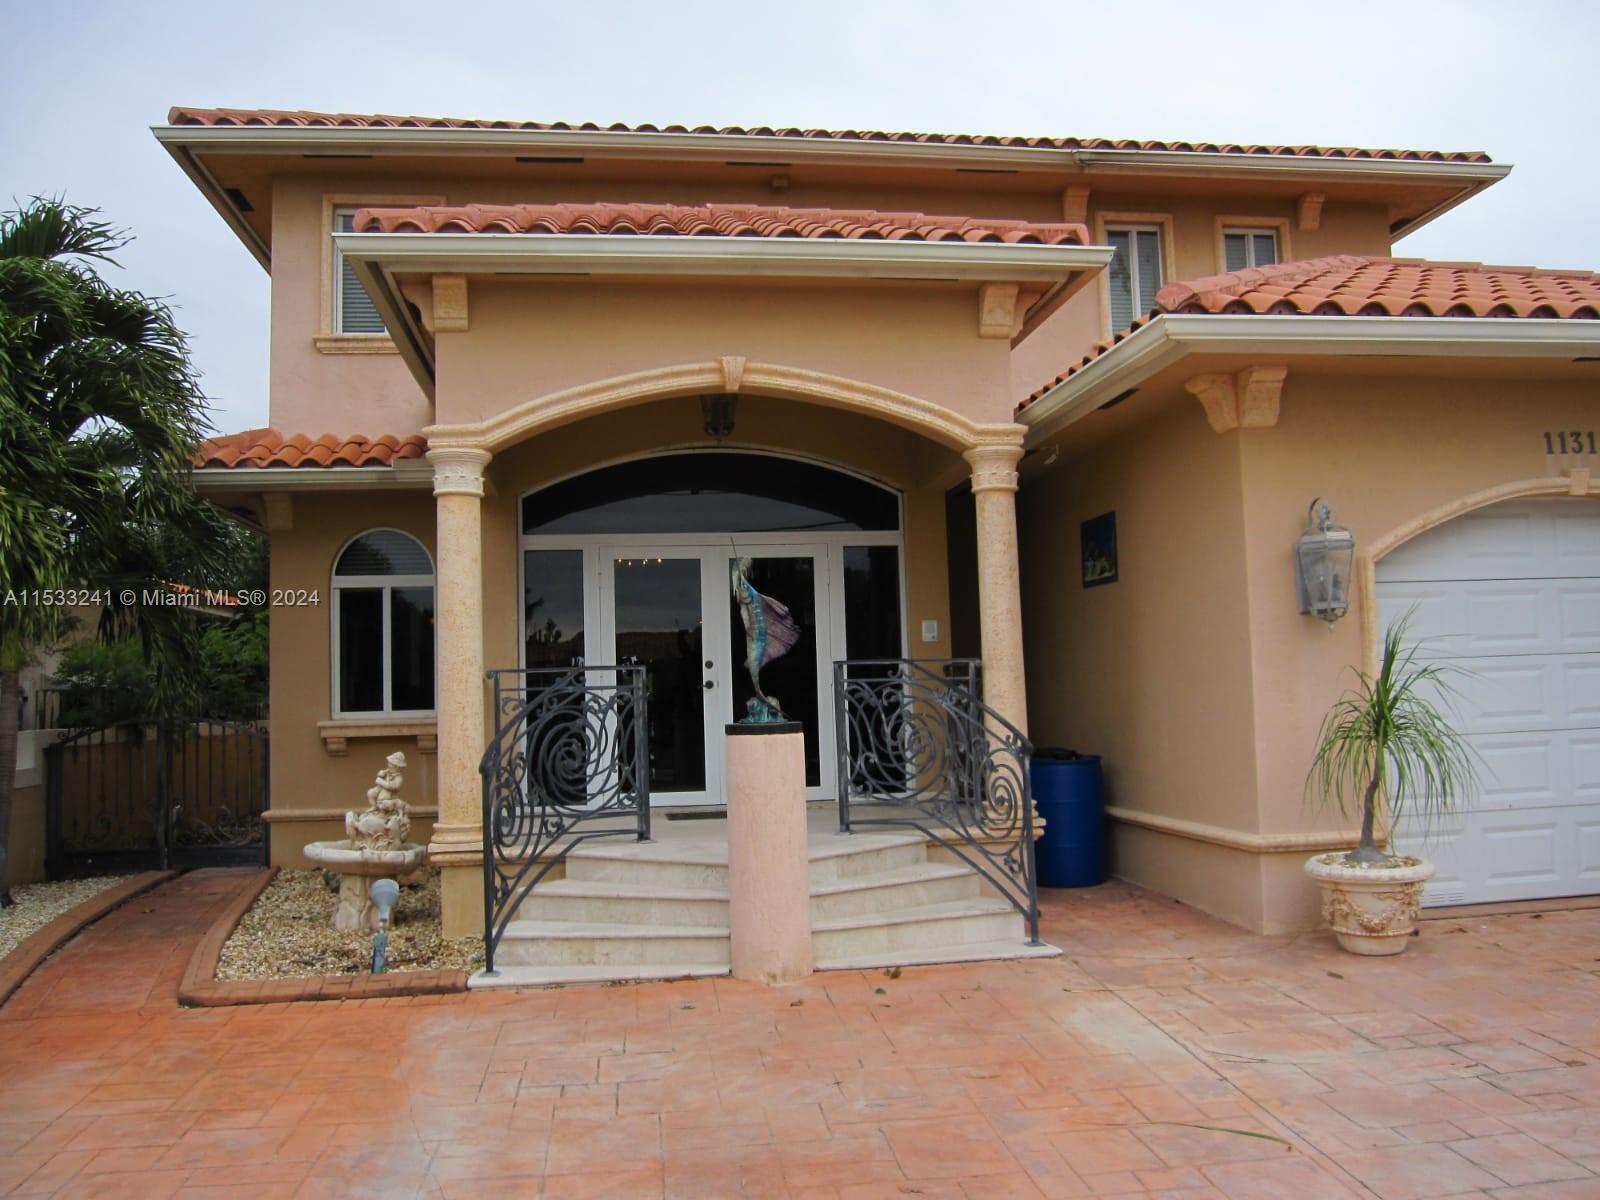 Rental Property at 1131 Stillwater Dr, Miami Beach, Miami-Dade County, Florida - Bedrooms: 5 
Bathrooms: 4  - $12,500 MO.